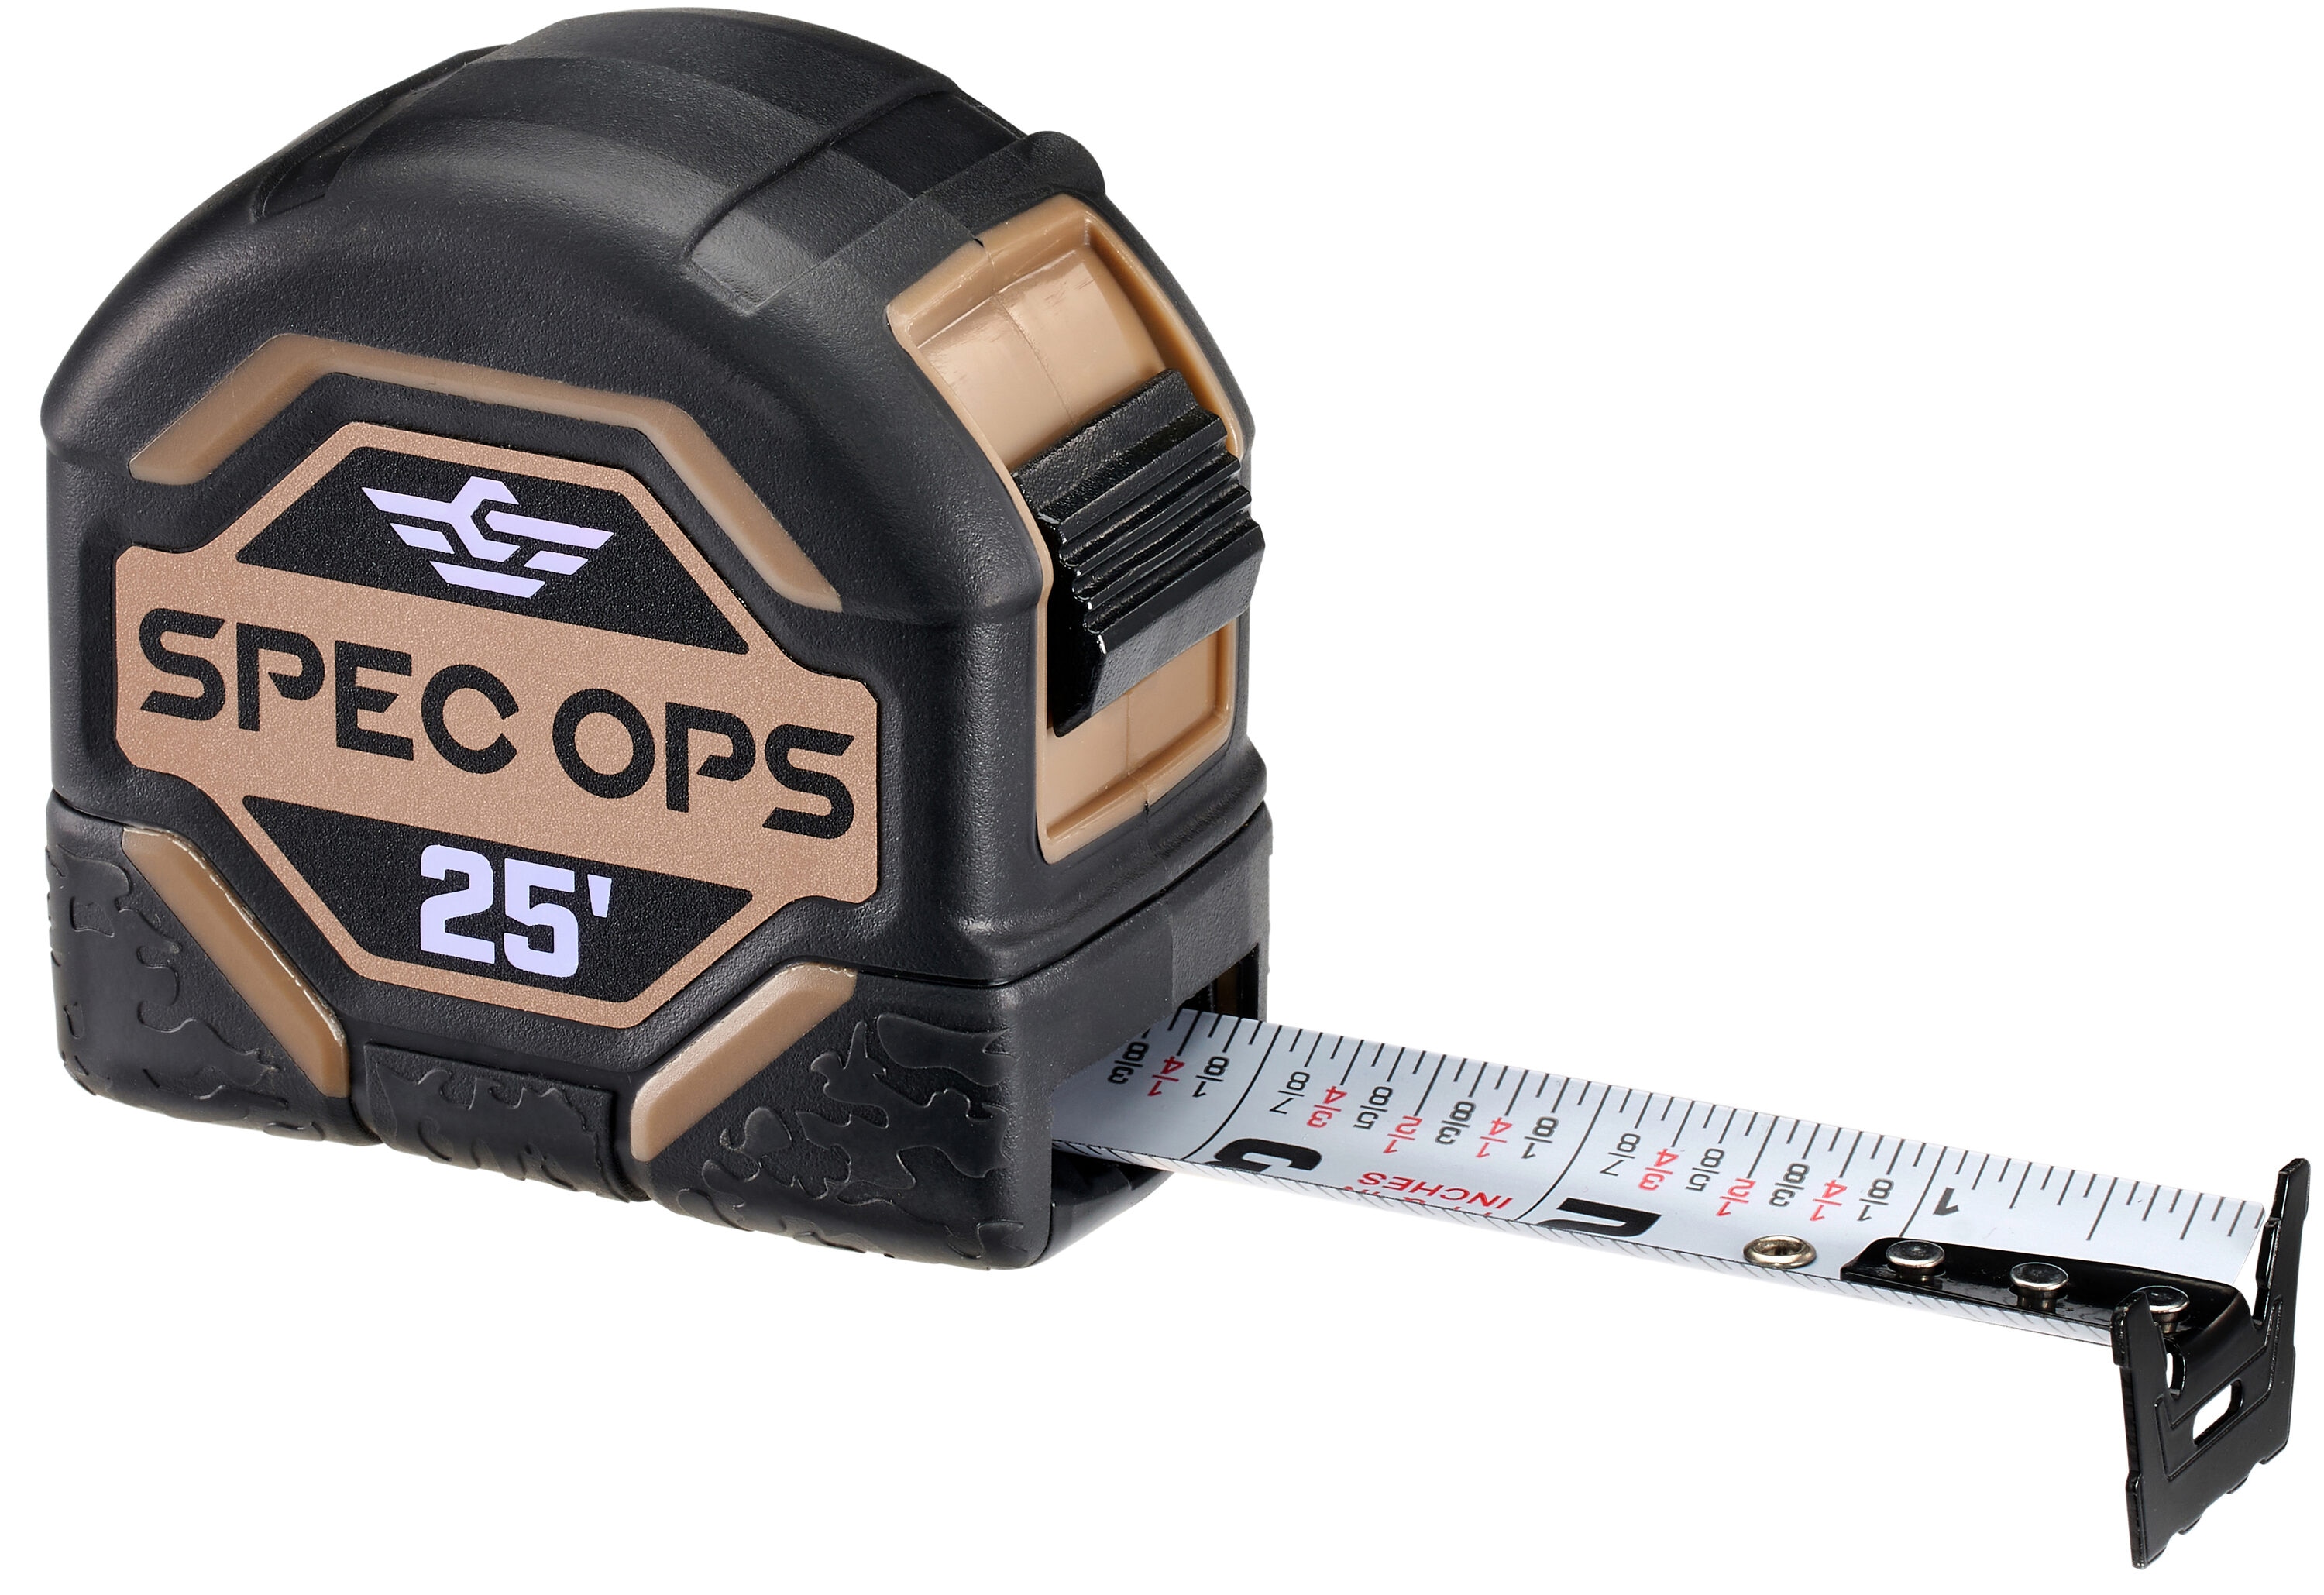 Retractable Tape Measure, set of 25 - Bulk Pricing